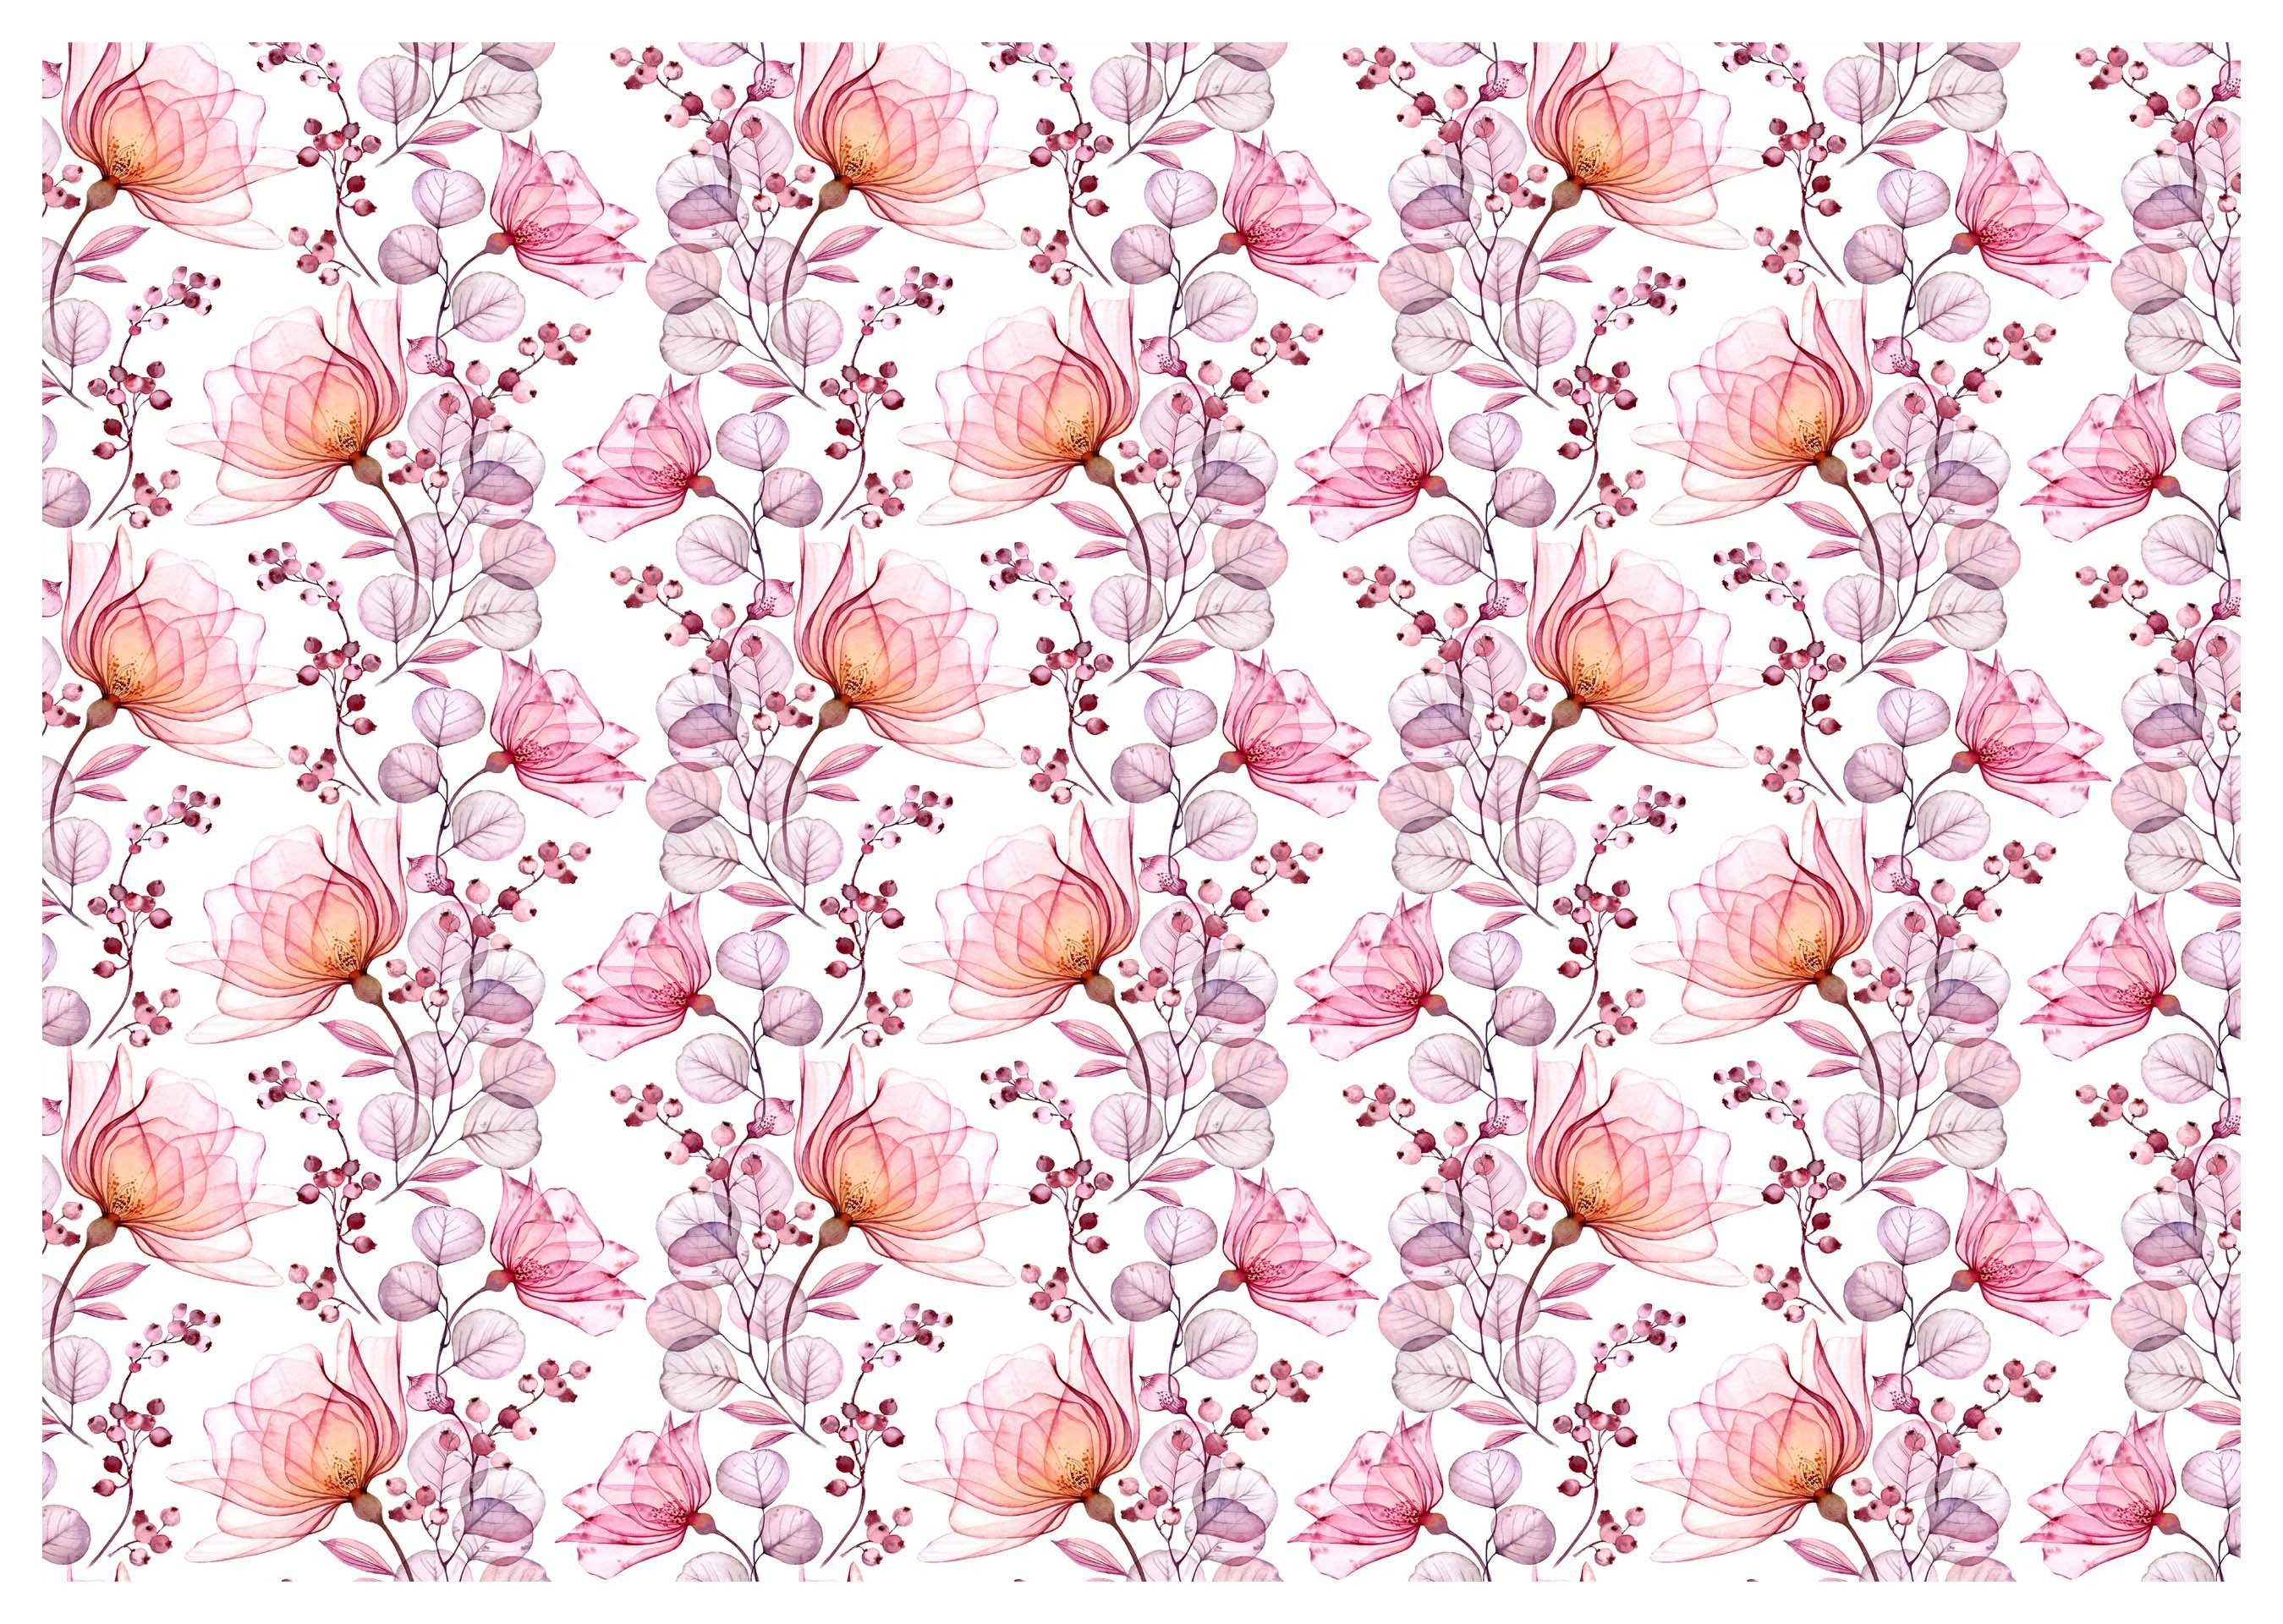 Blätter Motivtapete, wandmotiv24 Vliestapete Malerei Natur, Blüten Wandtapete, Fototapete glatt, matt,